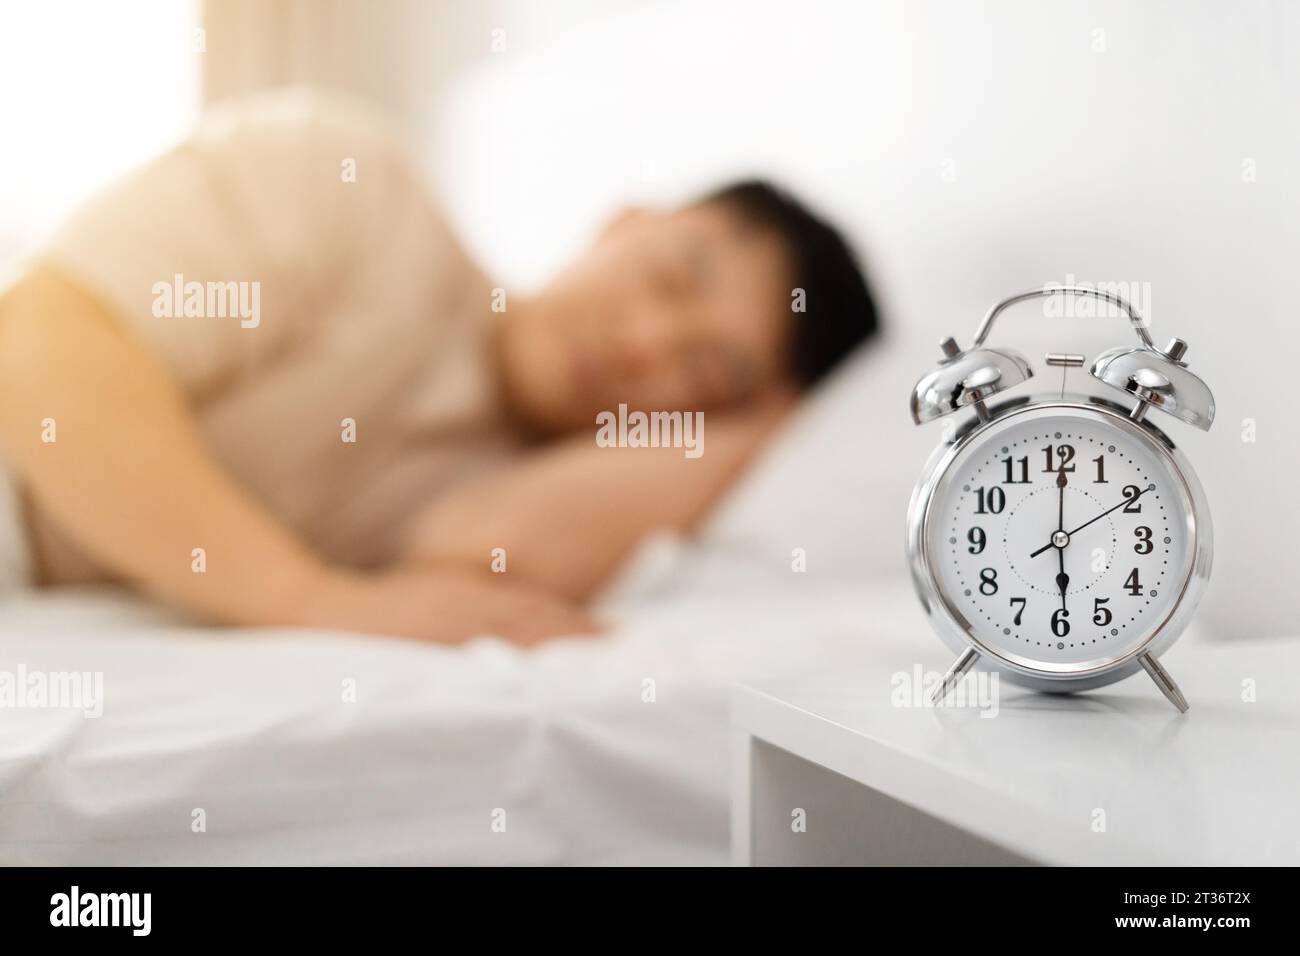 Asian man sleeping through alarm clock in the morning Stock Photo